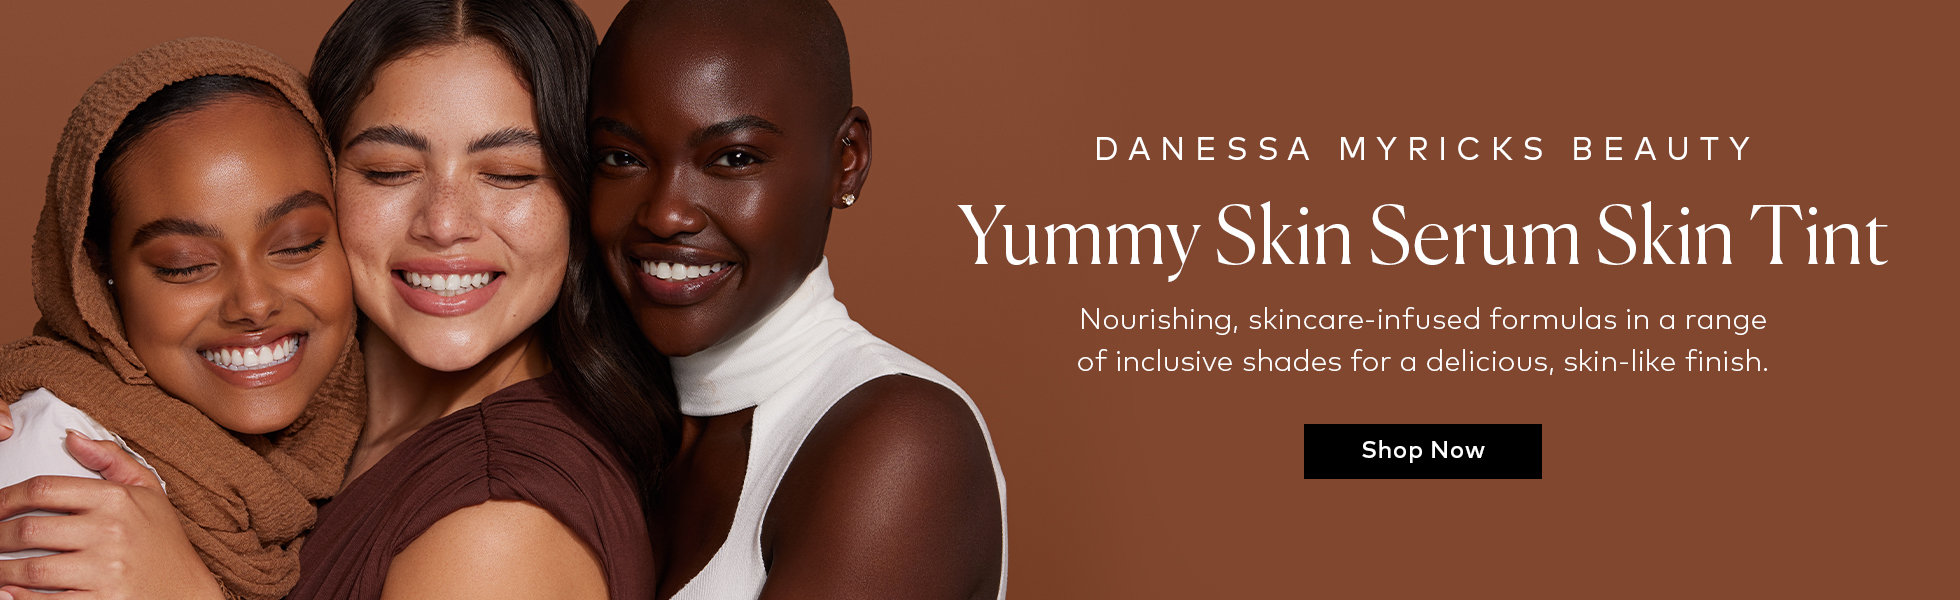 Shop the Danessa Myricks Yummy Skin Serum Skin Tint on Beautylish.com